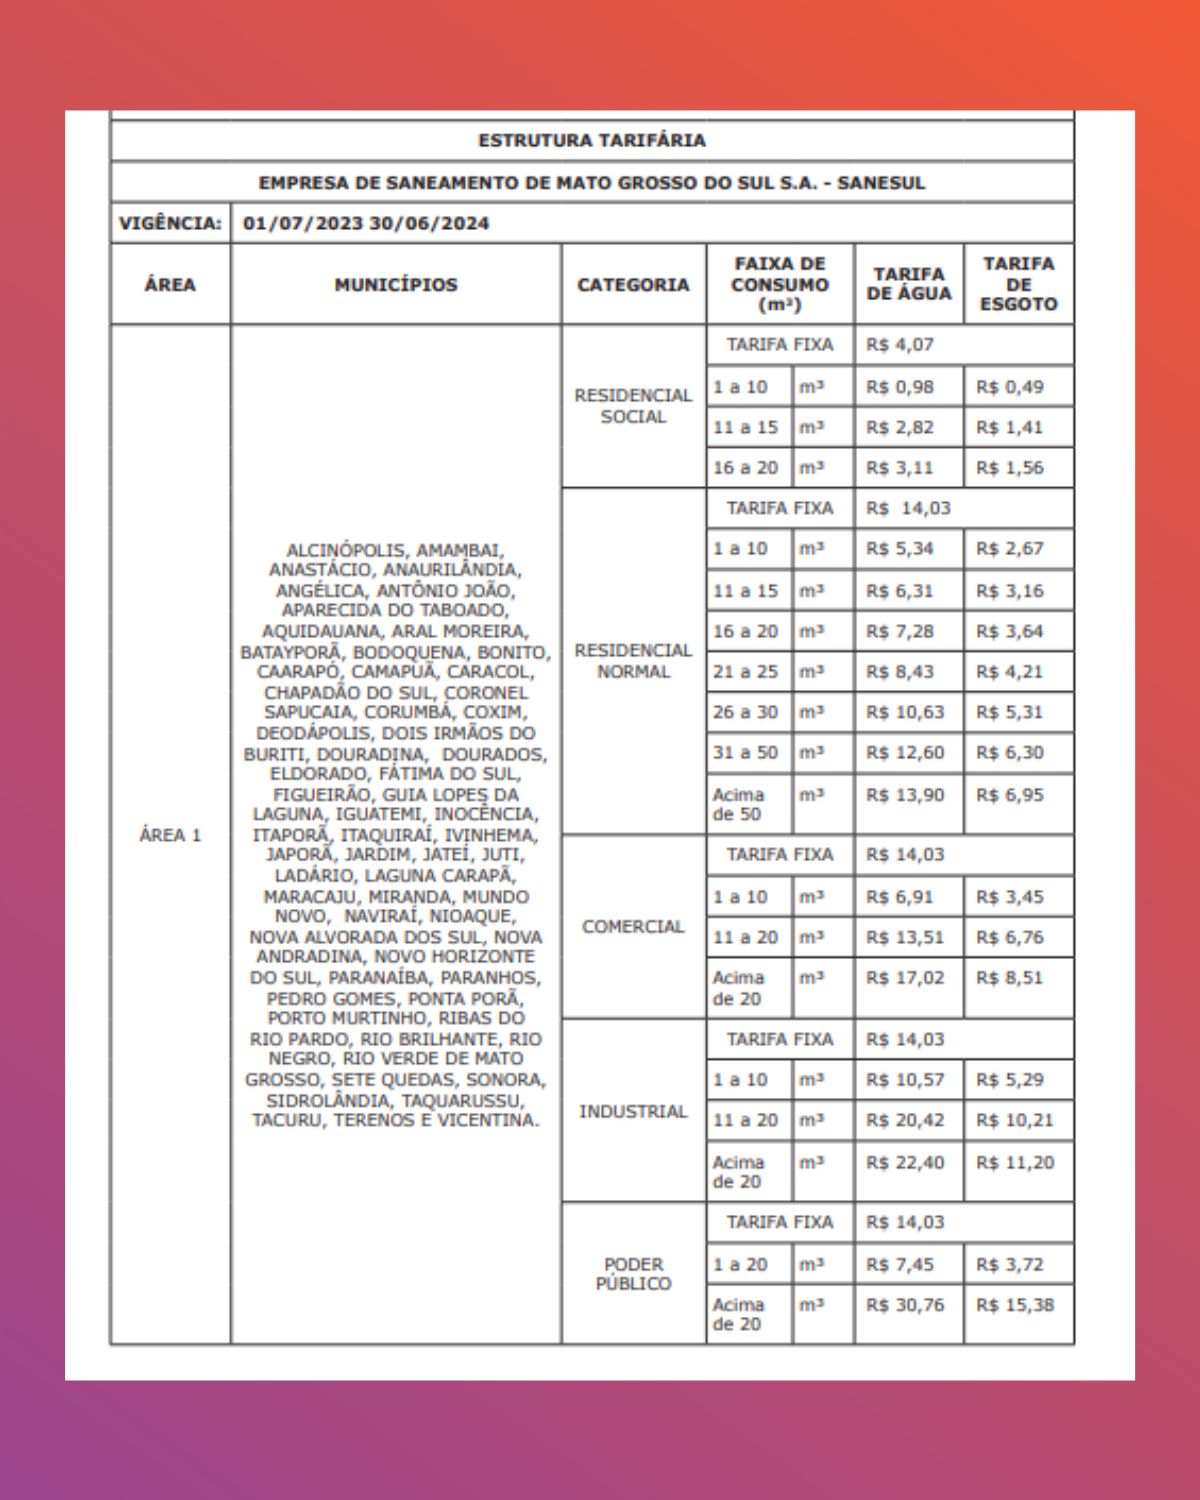 Estrutura tarifária de 2023 da Sanesul – tabela 1